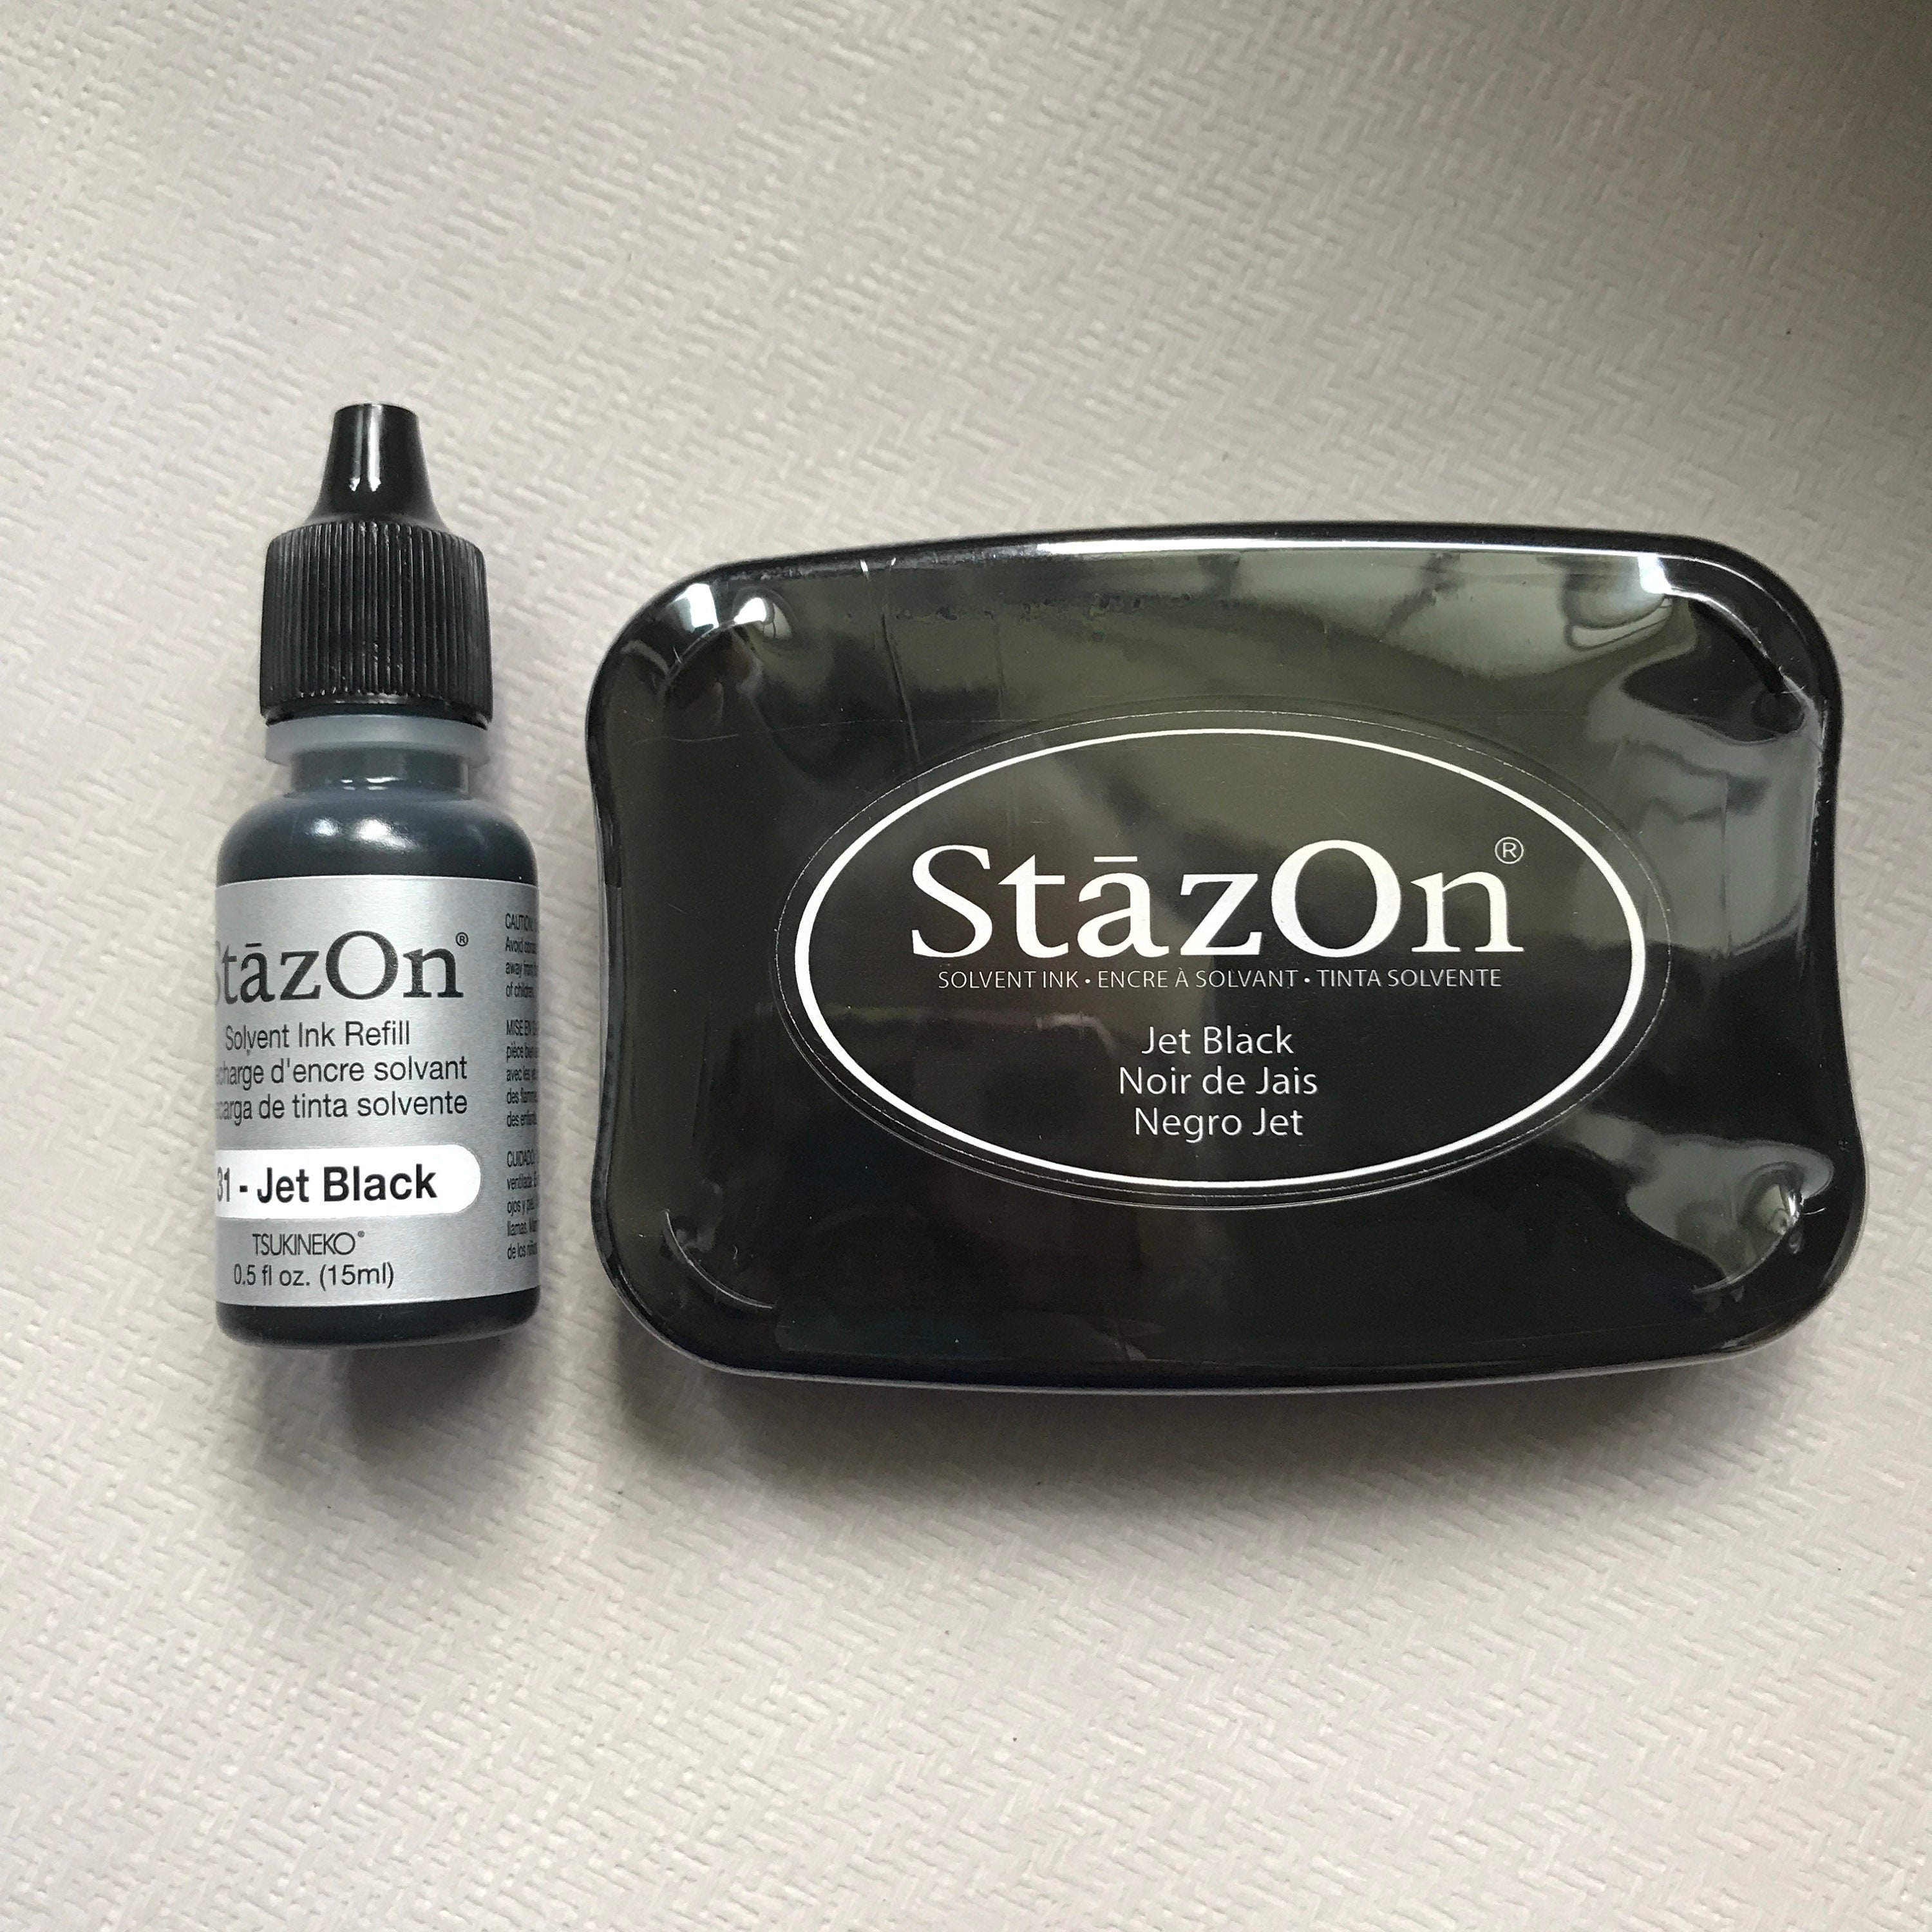 StazOn Solvent Ink Refill .5oz White